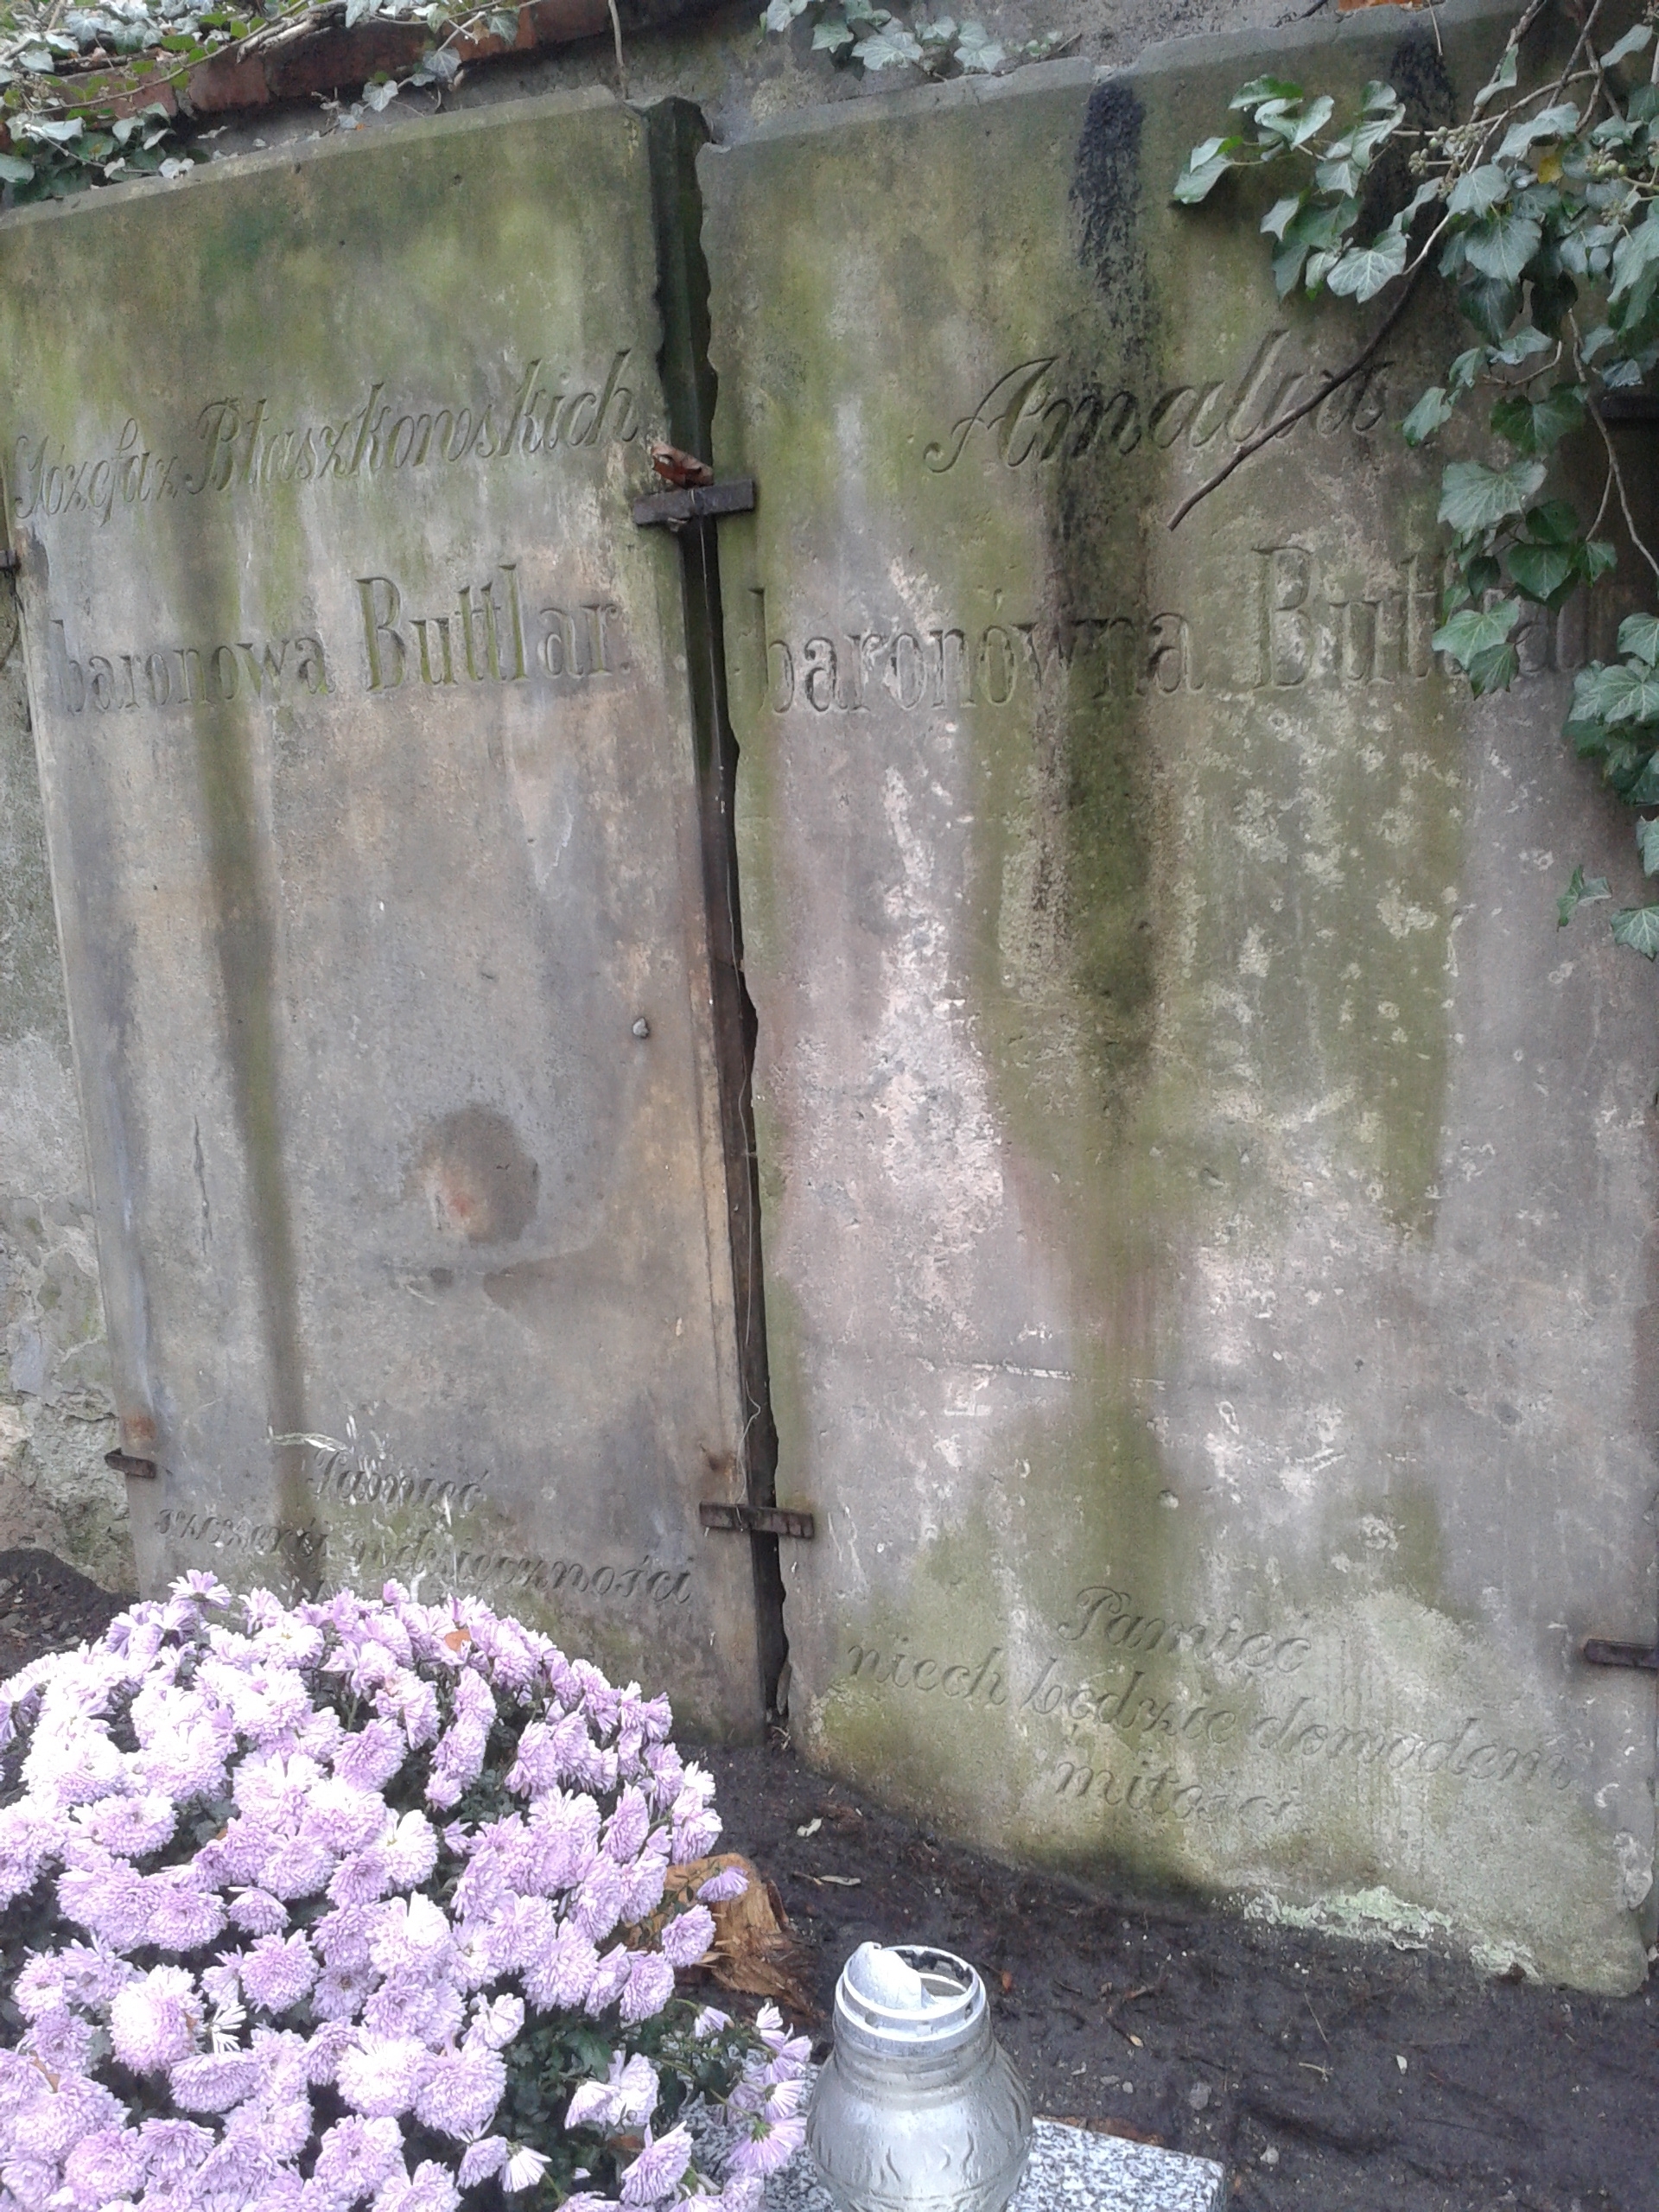 Buttlan gravesite